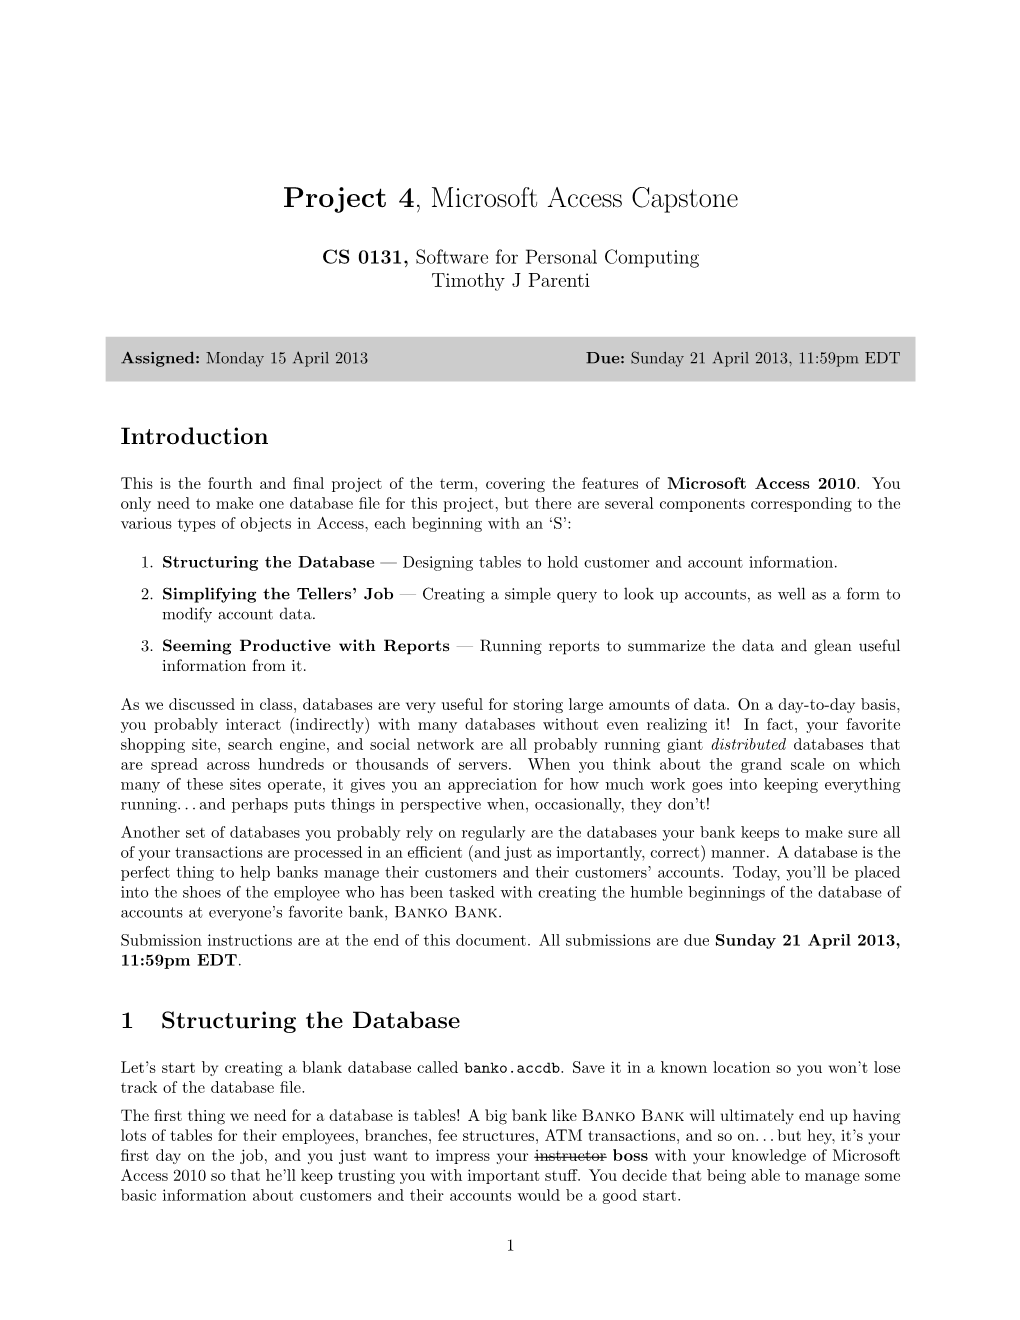 Project 4, Microsoft Access Capstone